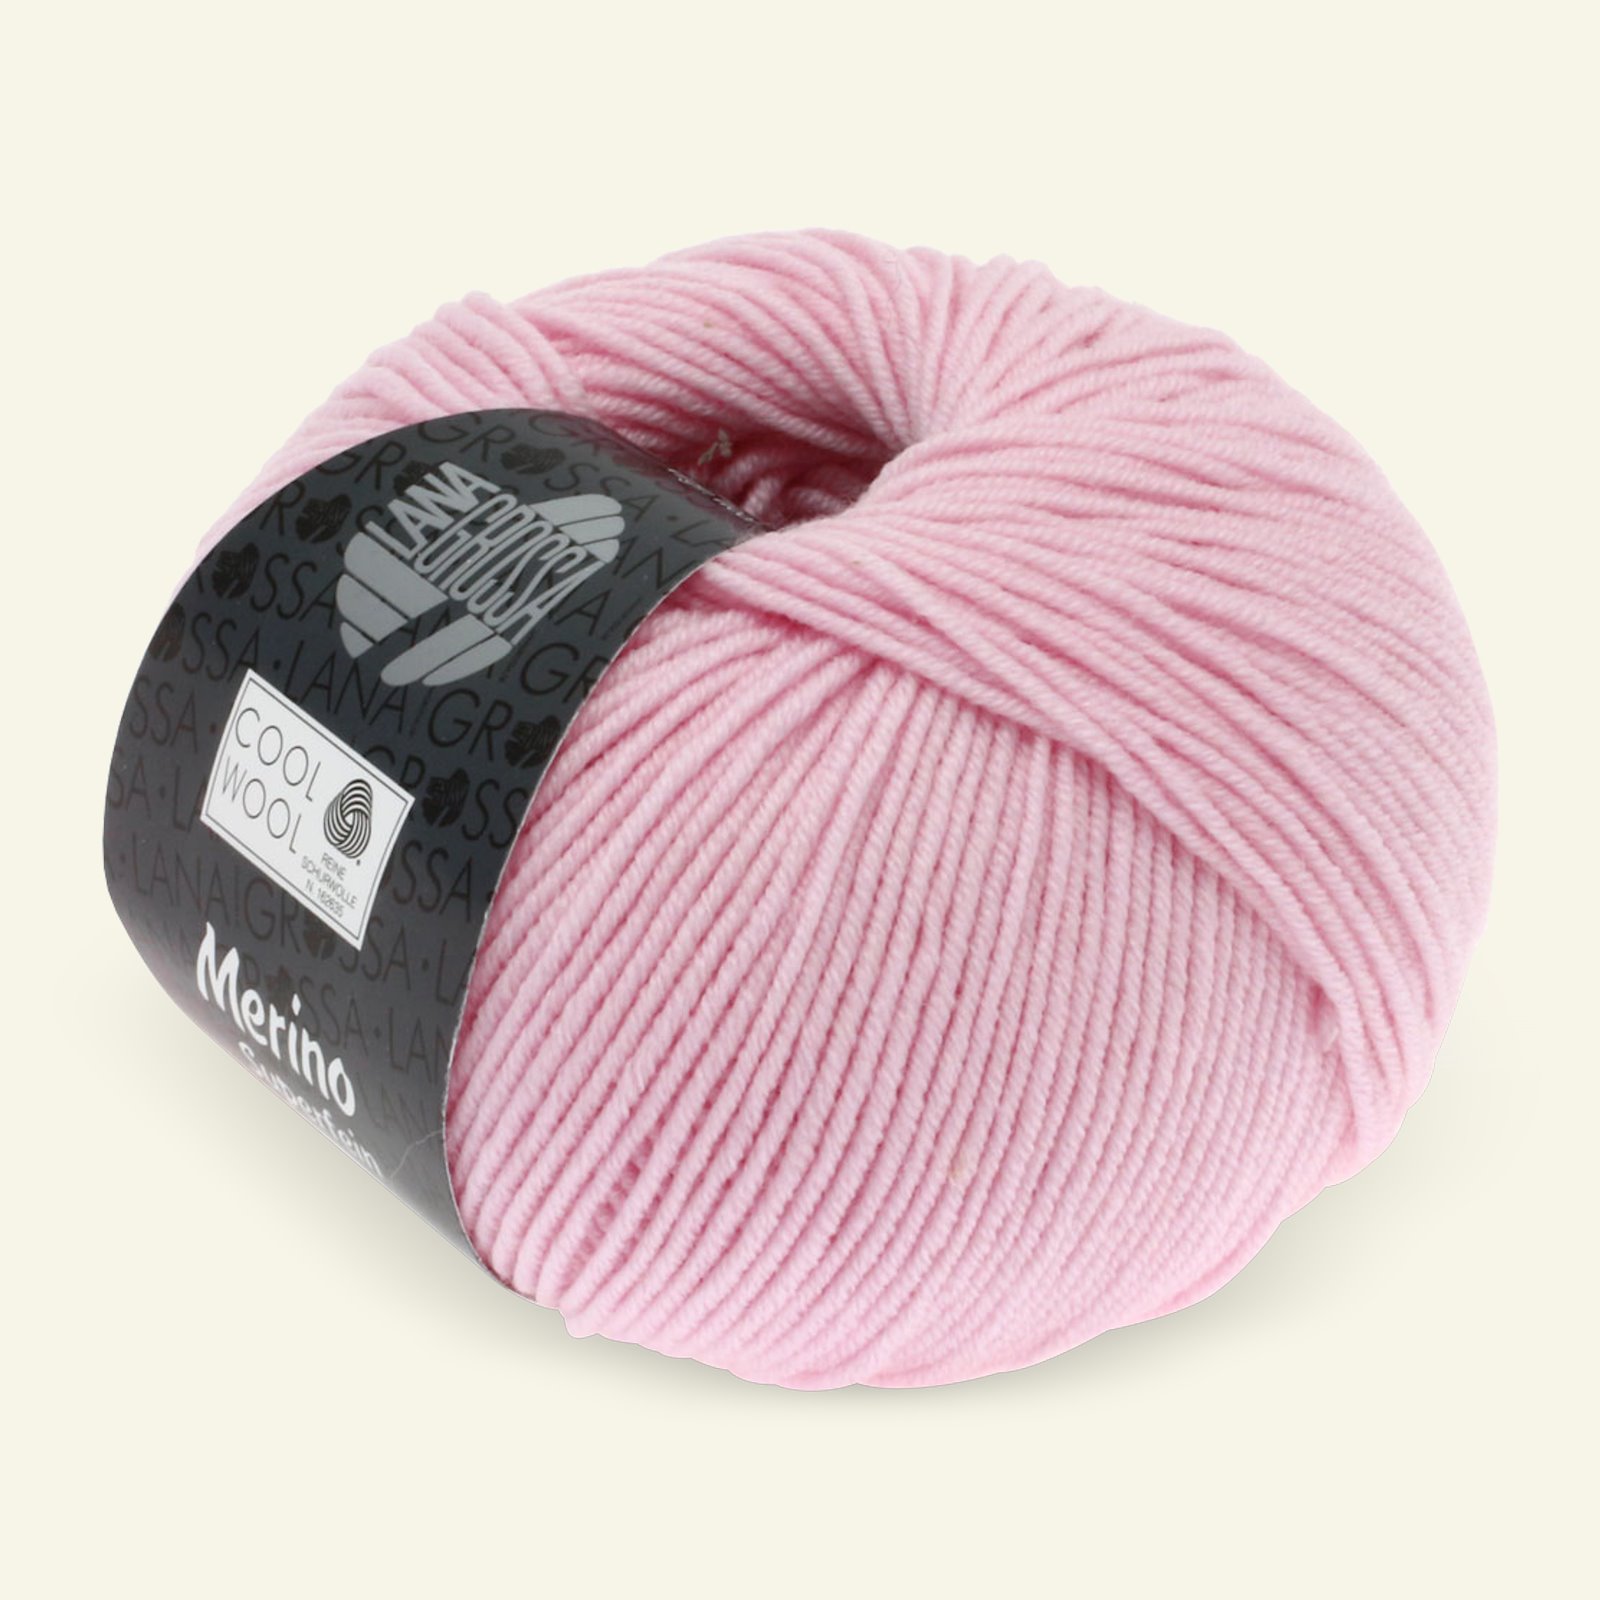 Lana Grossa, extrafine merino wool yarn "Cool Wool", pink 90001121_pack